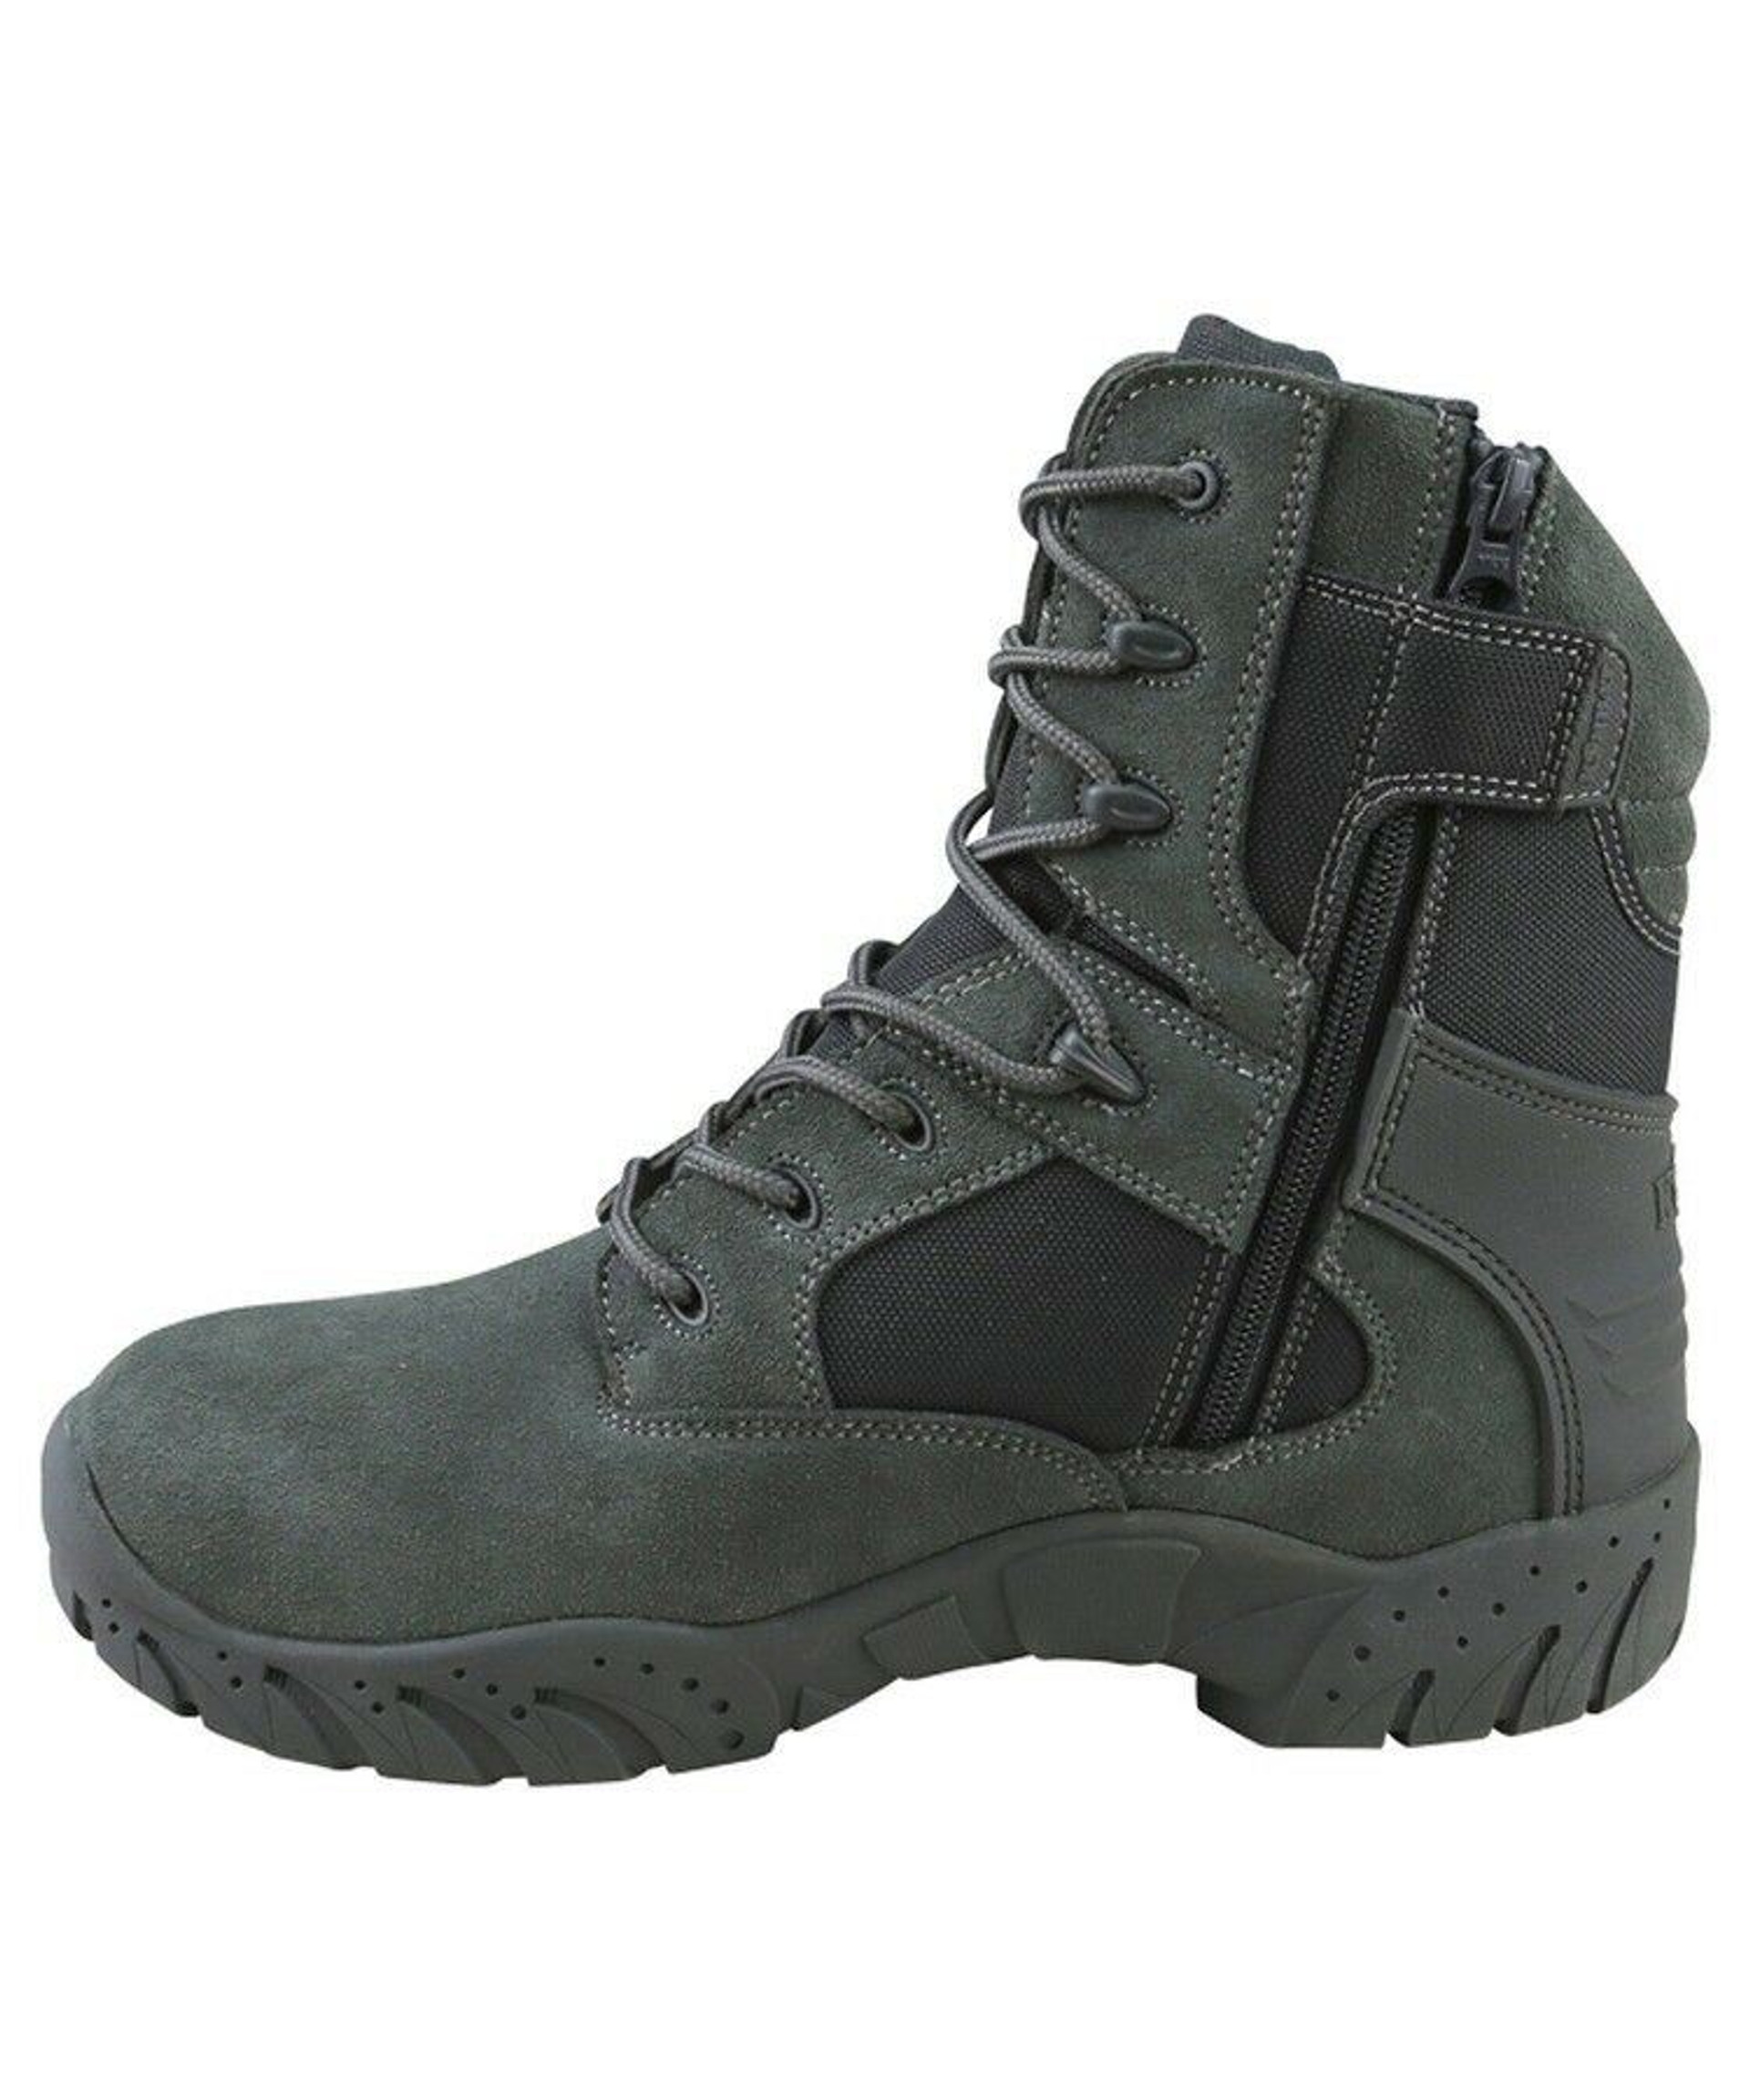 Kombat UK Tactical Pro Boots in Gunmetal Grey - lakelandcountry